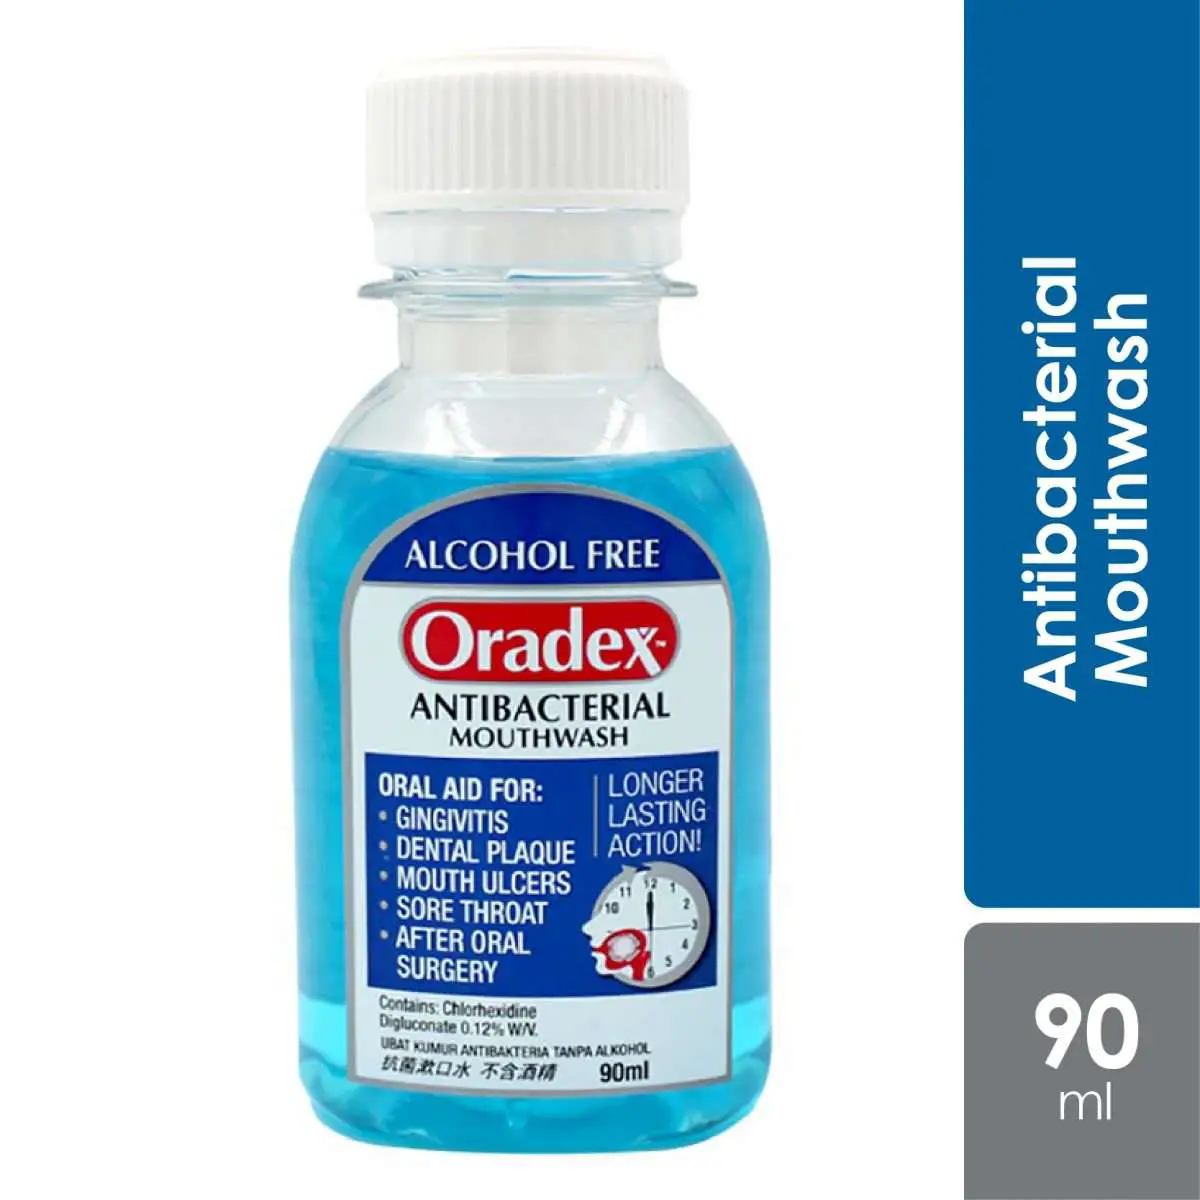 Oradex Antibacterial Mouthwash 90ml